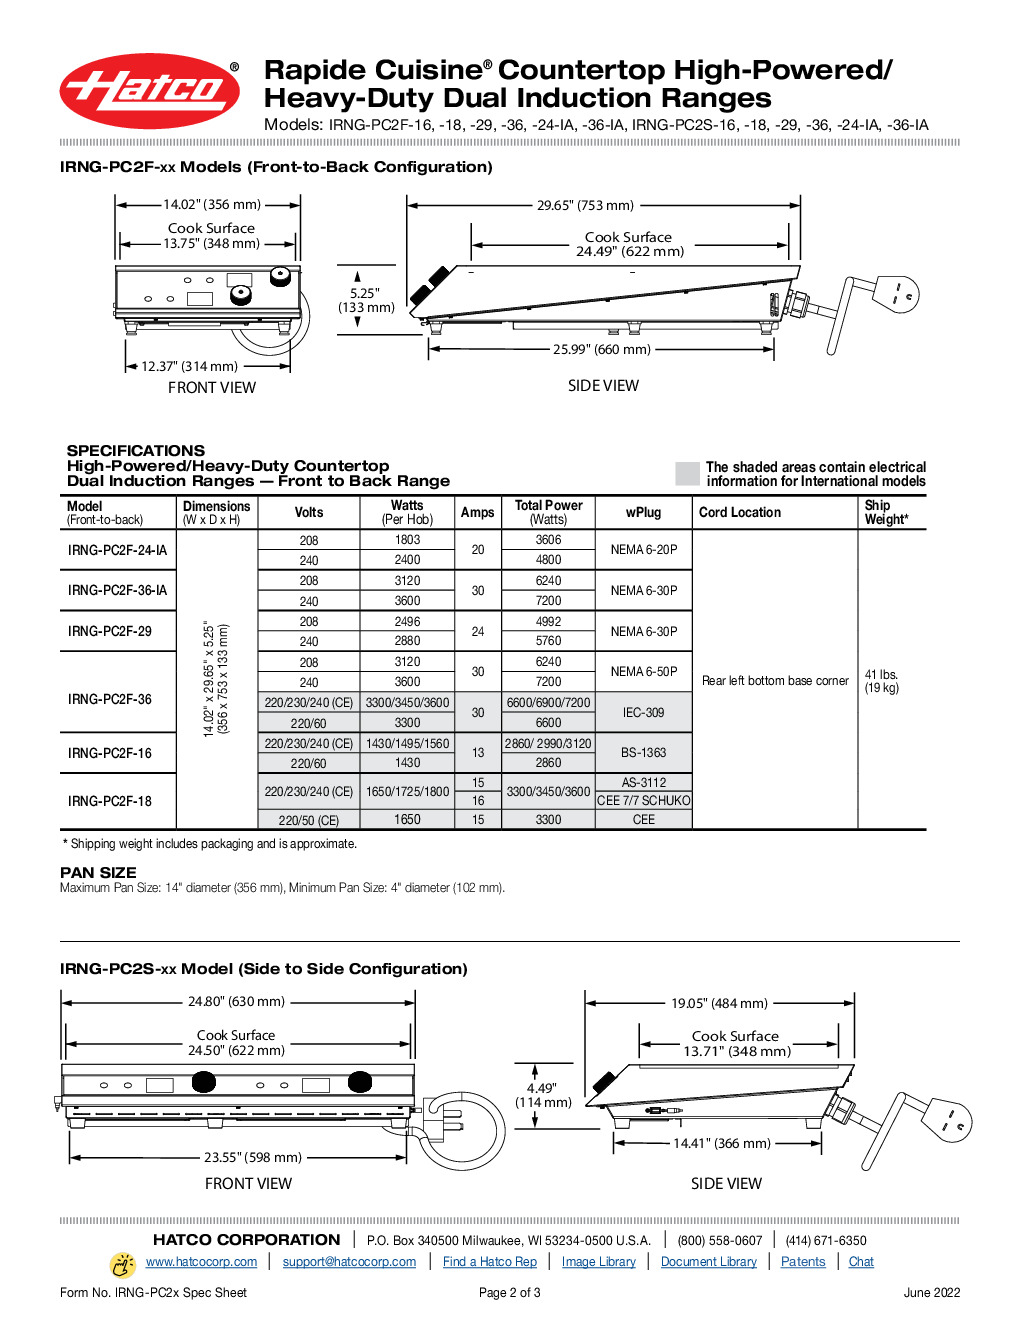 Hatco IRNG-PC2S-36-QS Countertop Induction Range